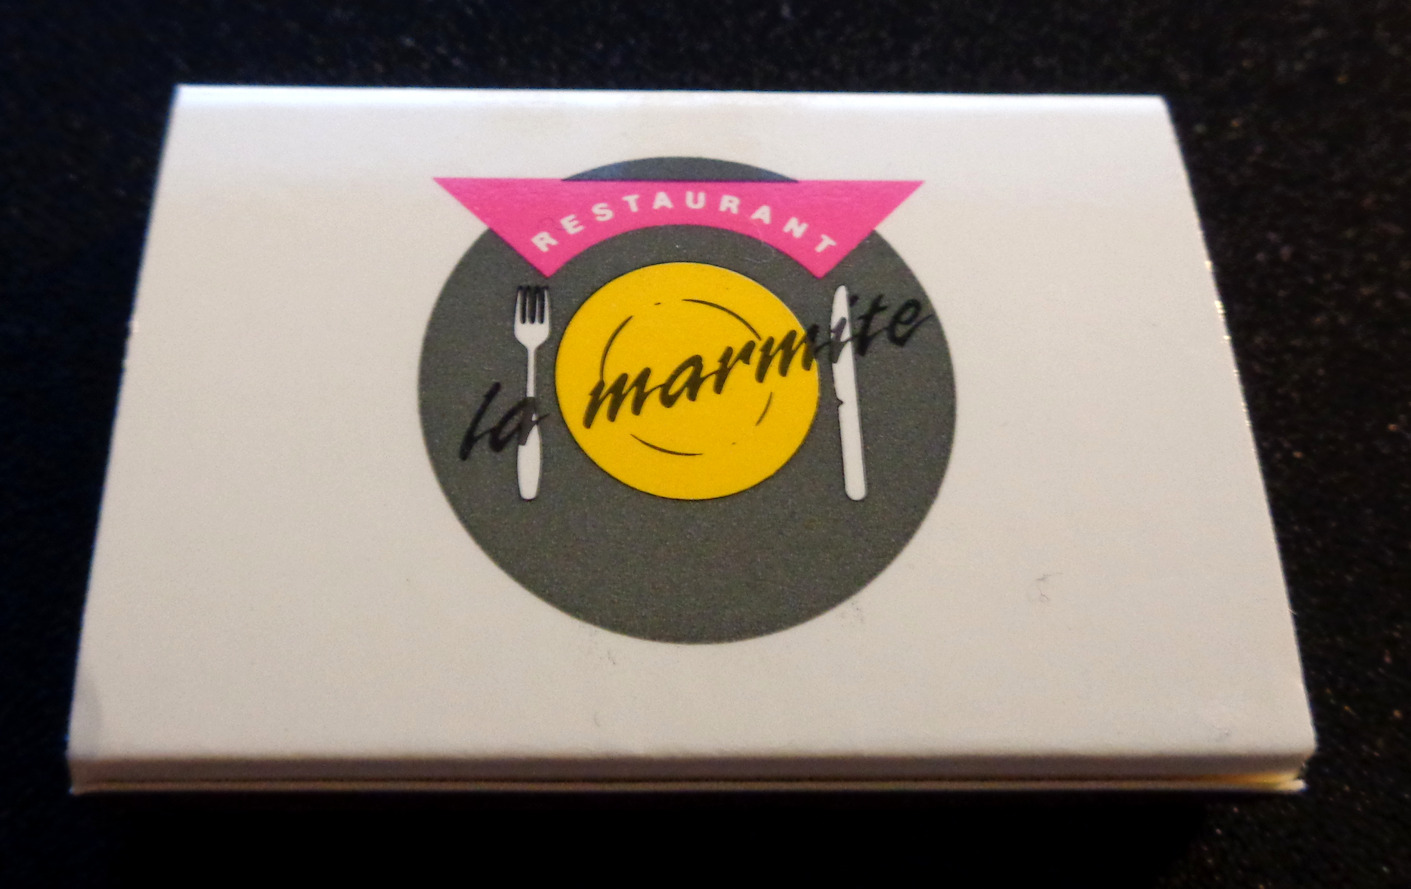 Vintage La Marmite Restaurant Bastion Hotels Netherlands Match Book Box EMPTY